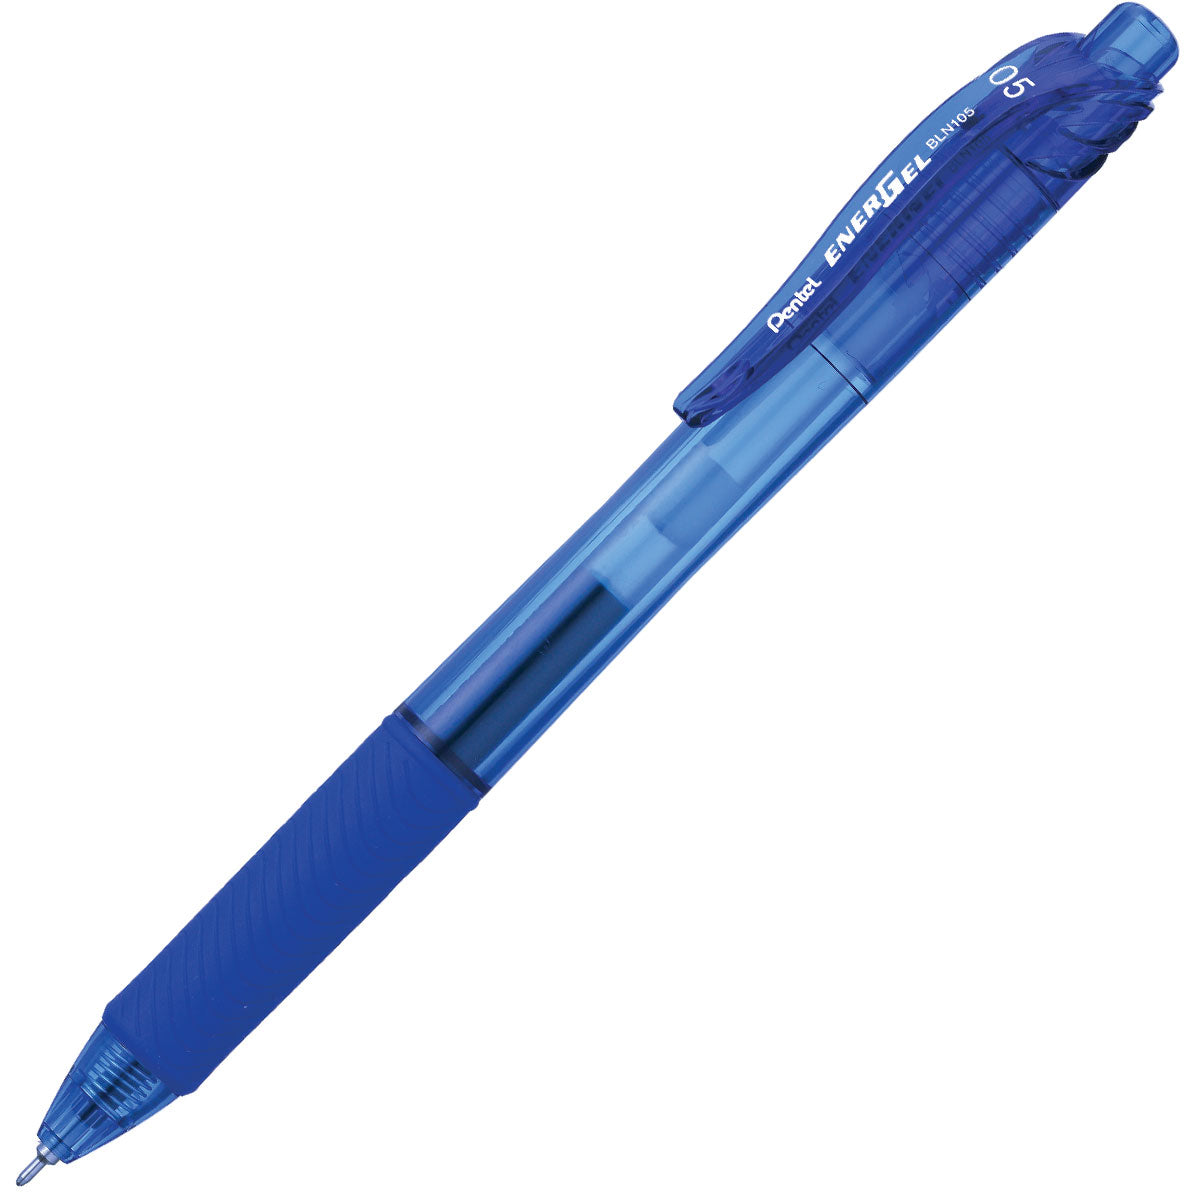 עט רולר לחצן פנטל  ג'ל 0.5 -*BLN105-AX